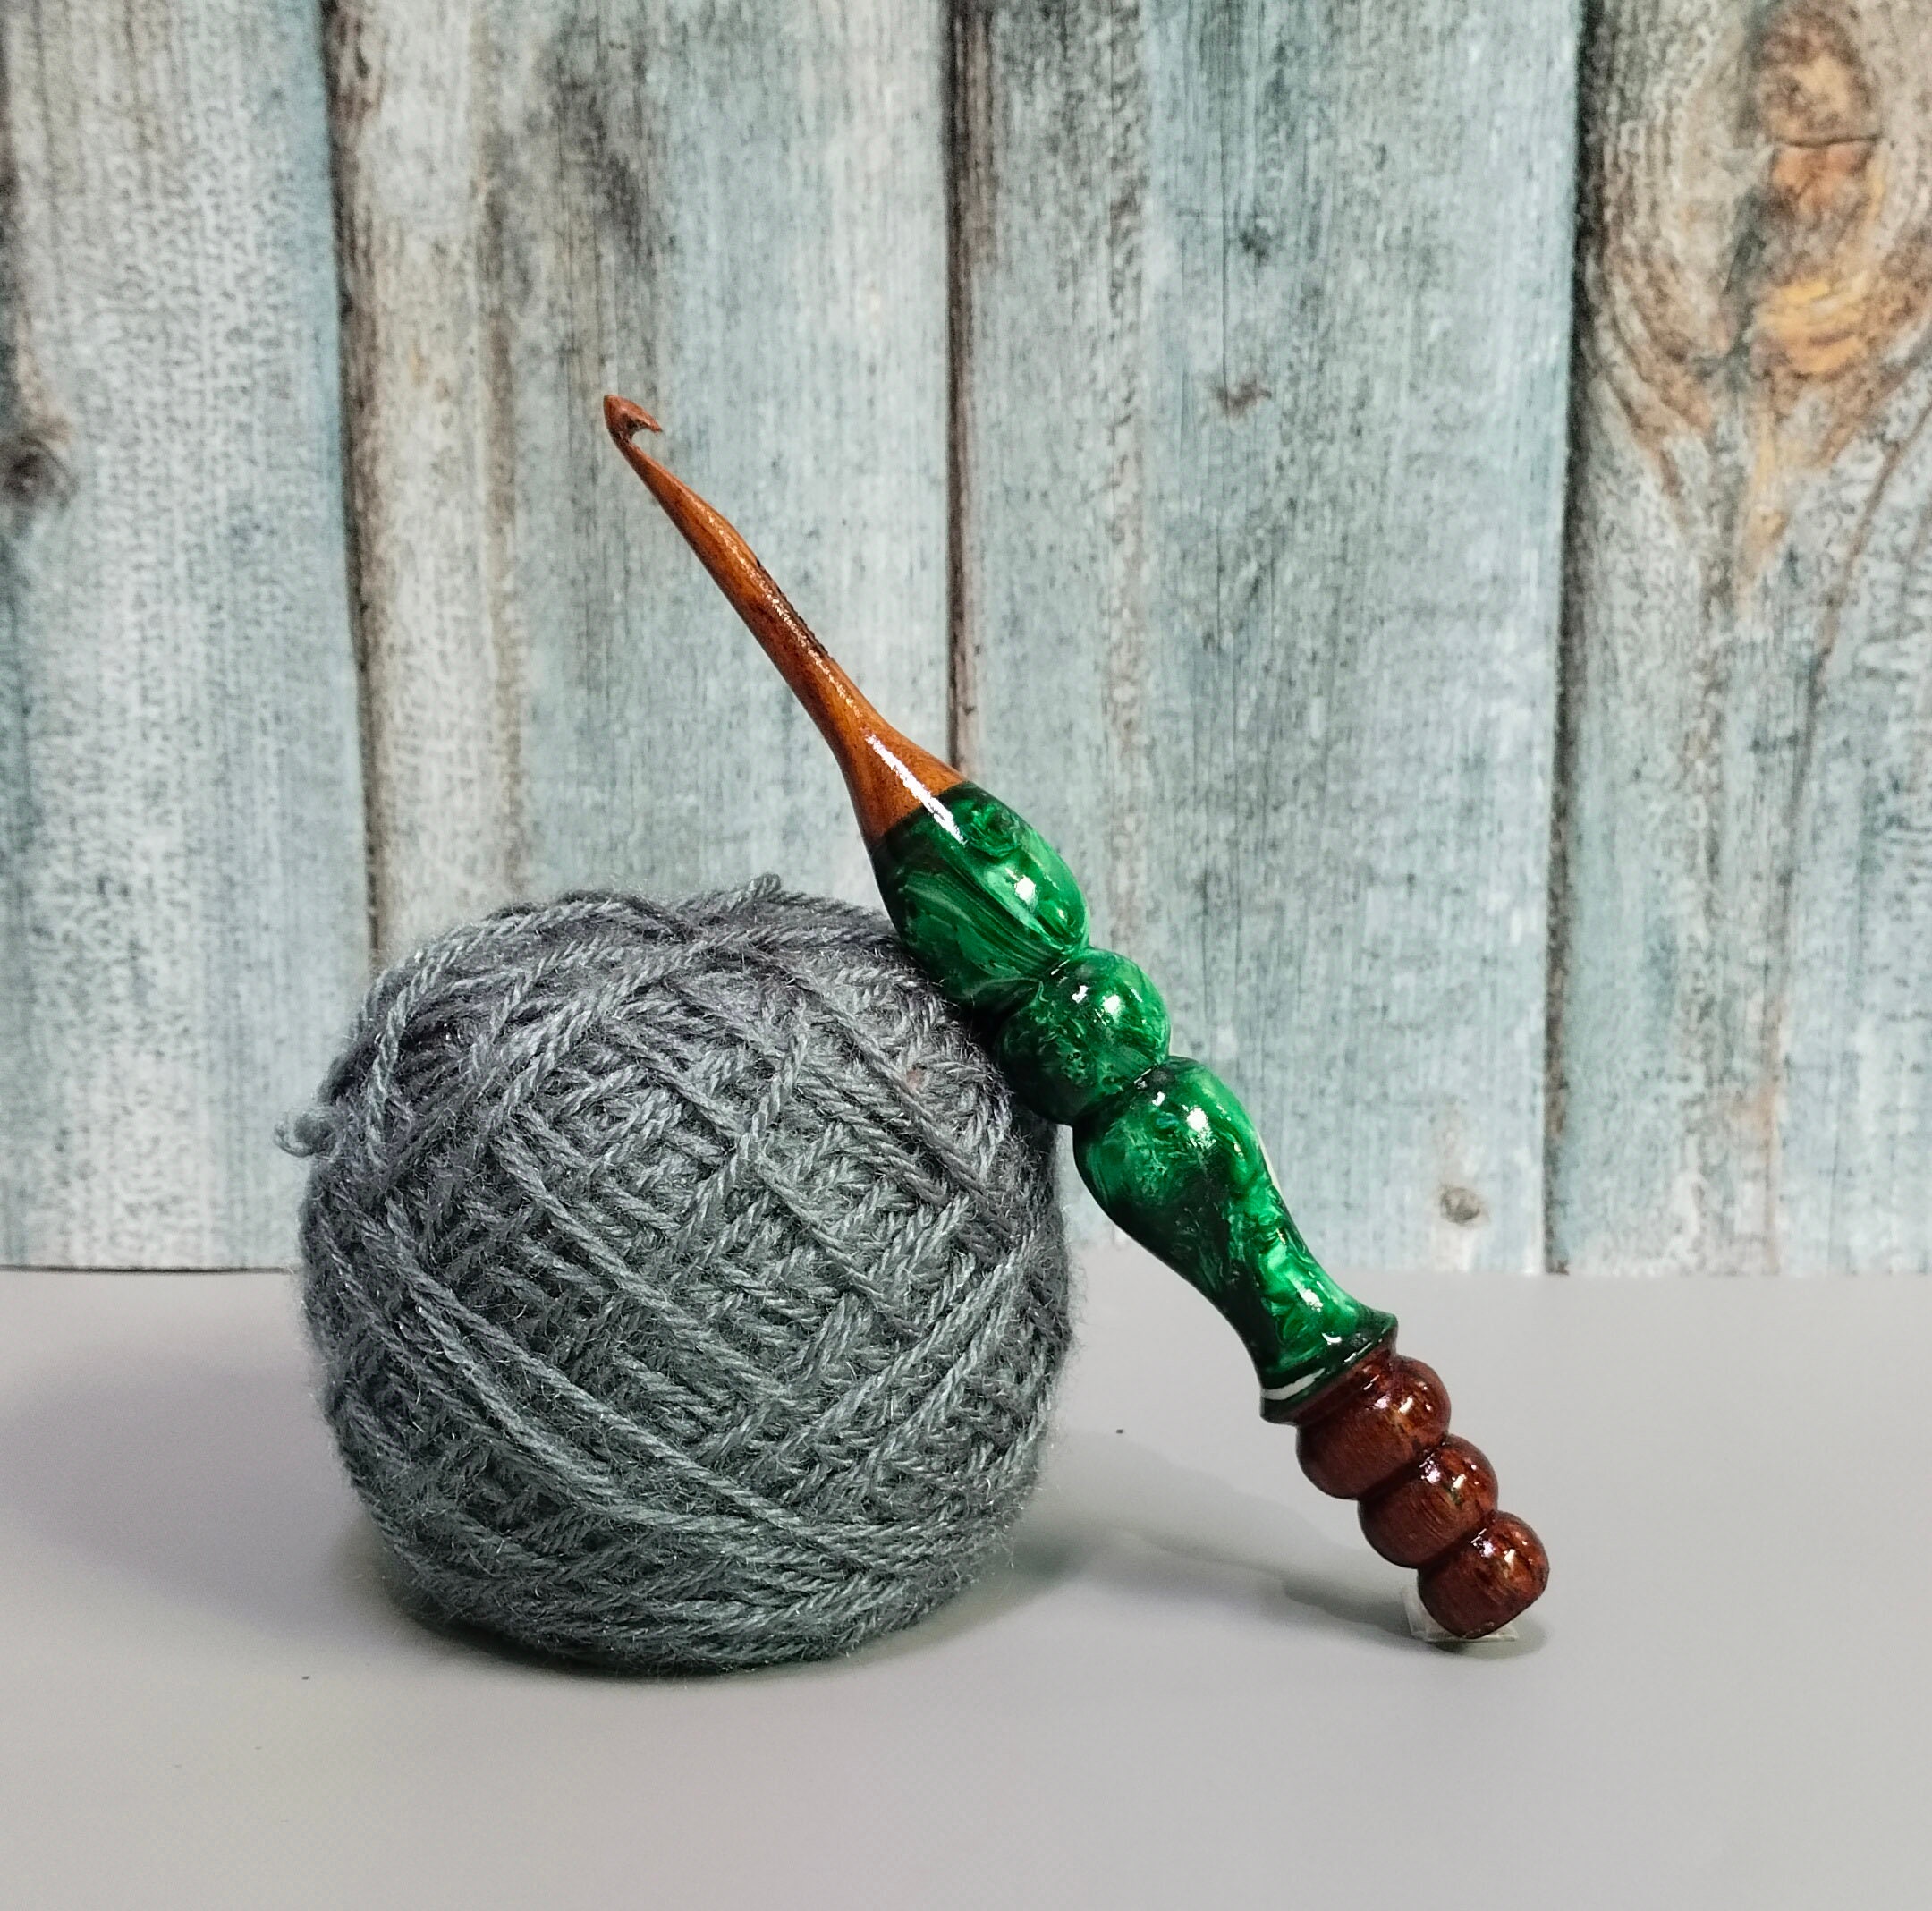 INTAJ Handmade Wooden Crochet Hook - Rosewood Needle Crochet Hooks Set -  Yarn Craft Knitting Needle for Chrocheting Lace Doilies Flower Projects  (Set